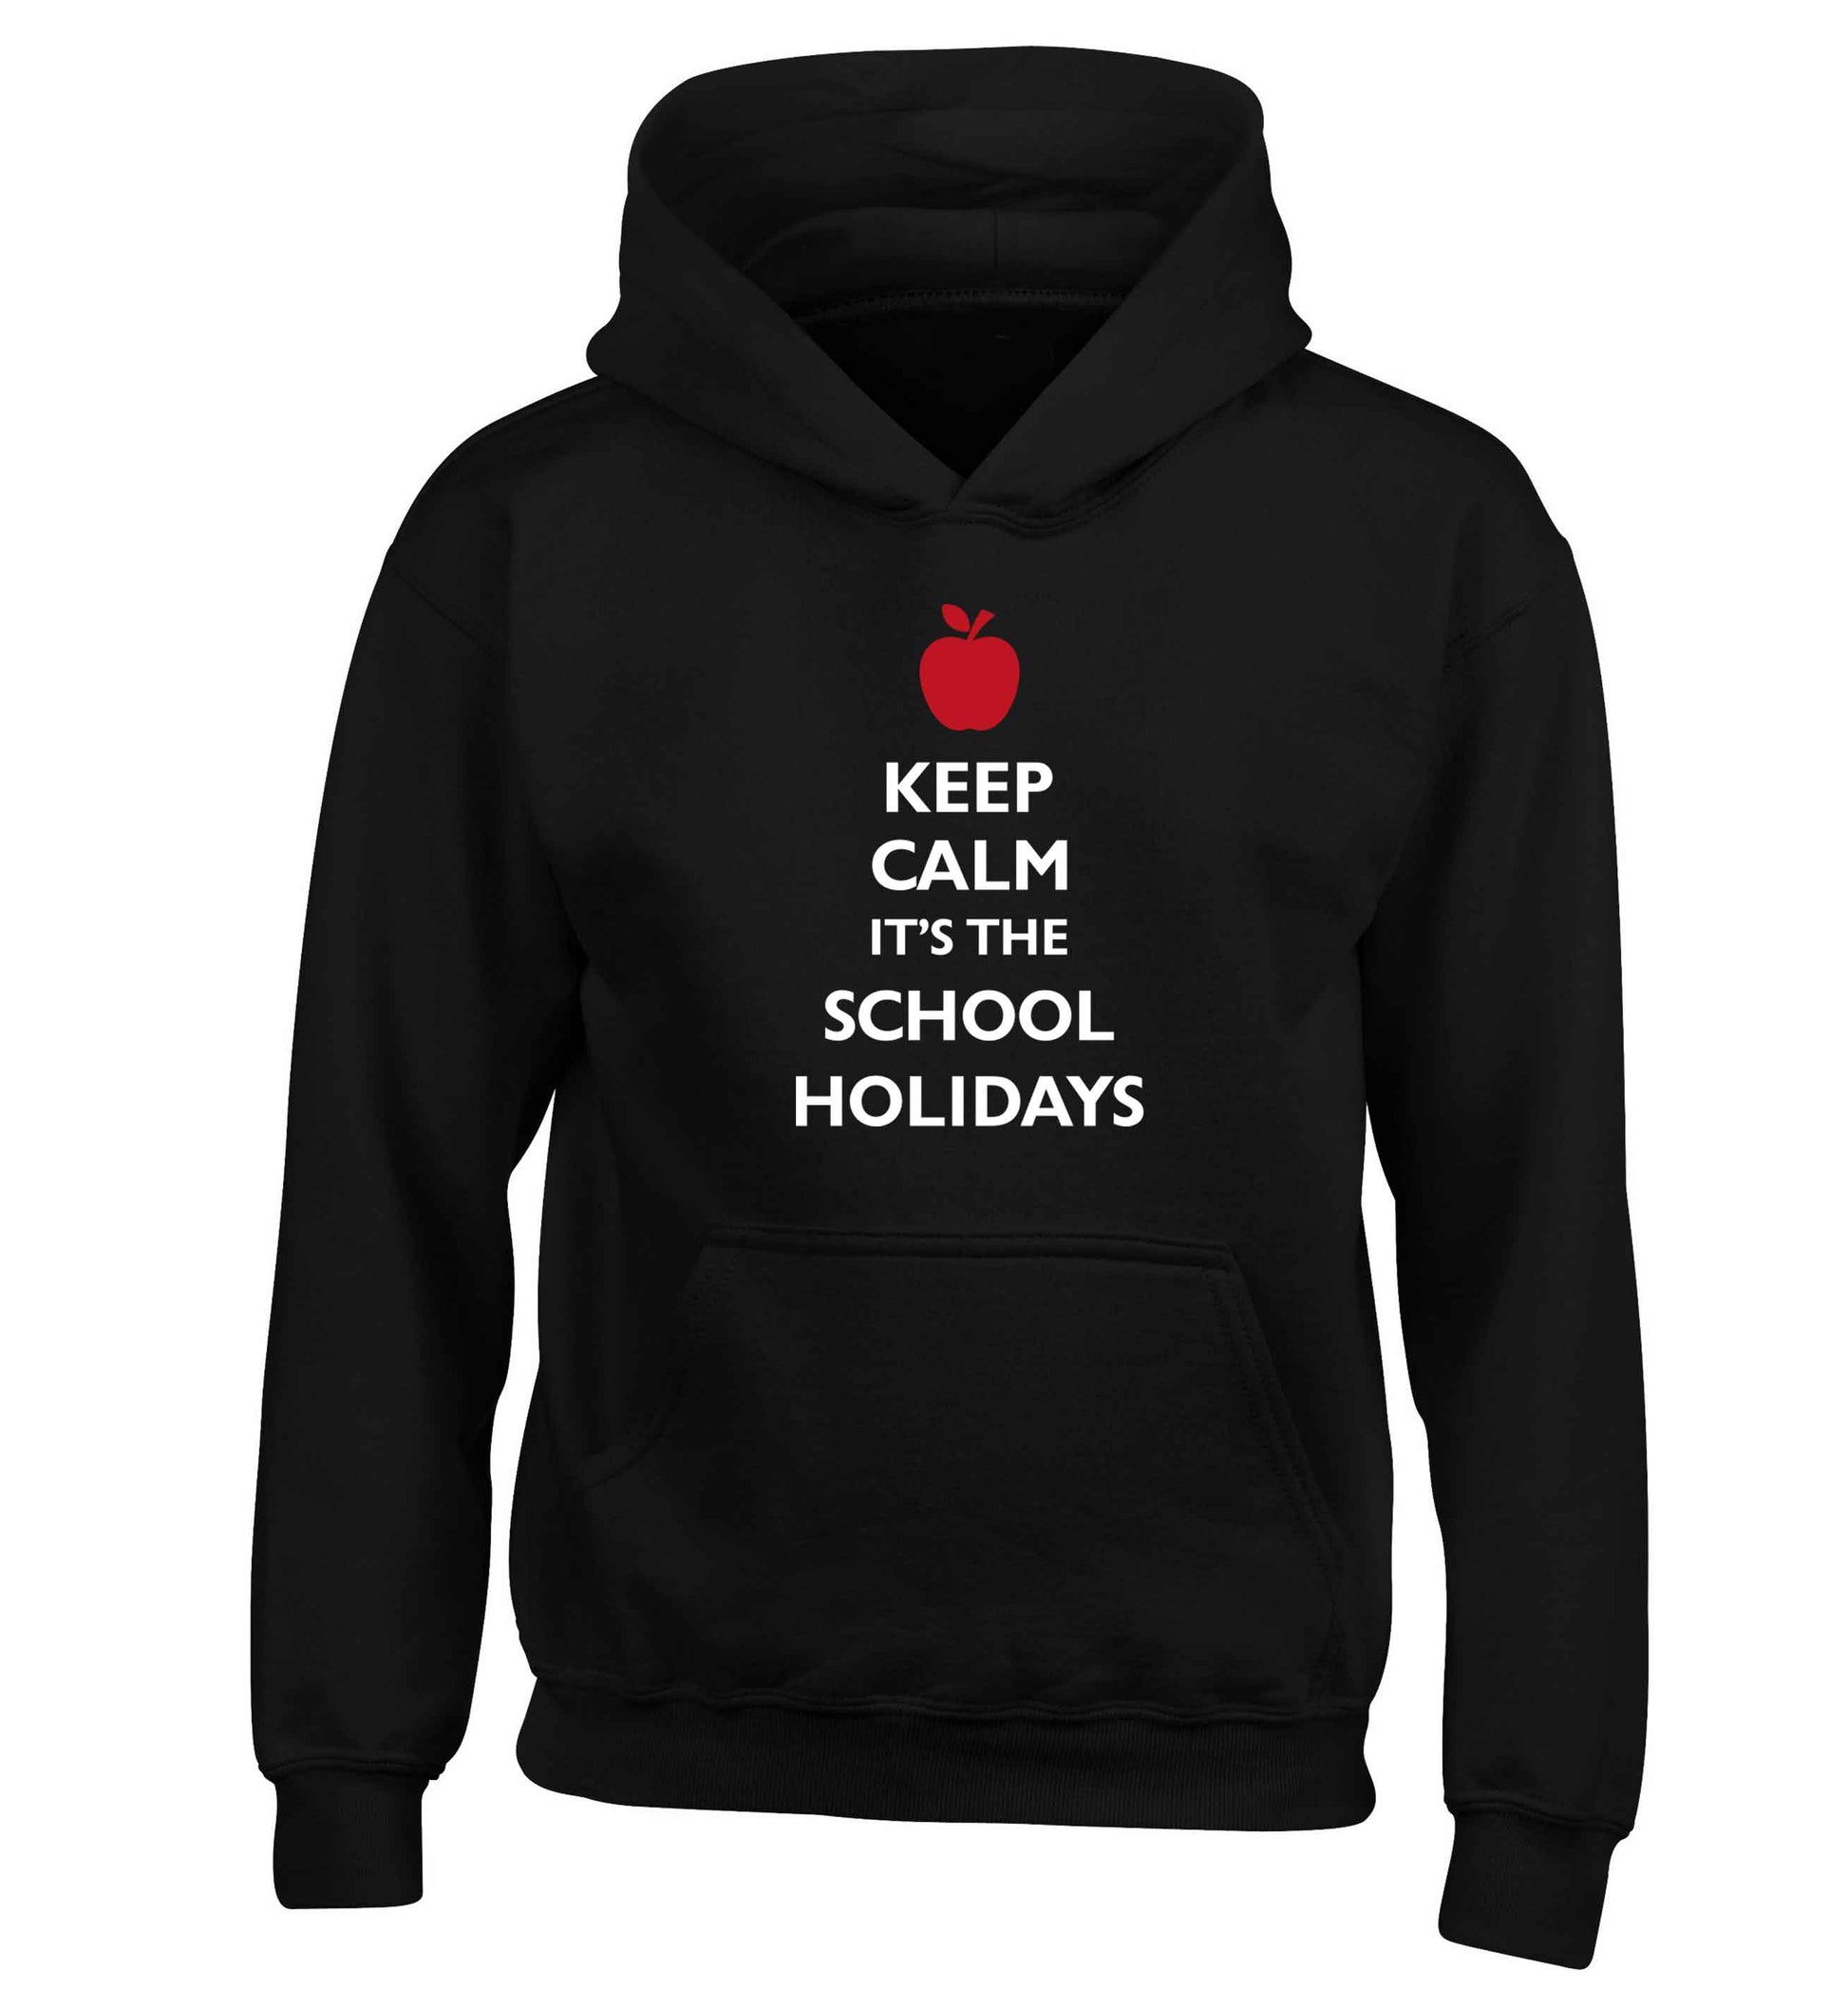 Keep calm it's the school holidays children's black hoodie 12-13 Years